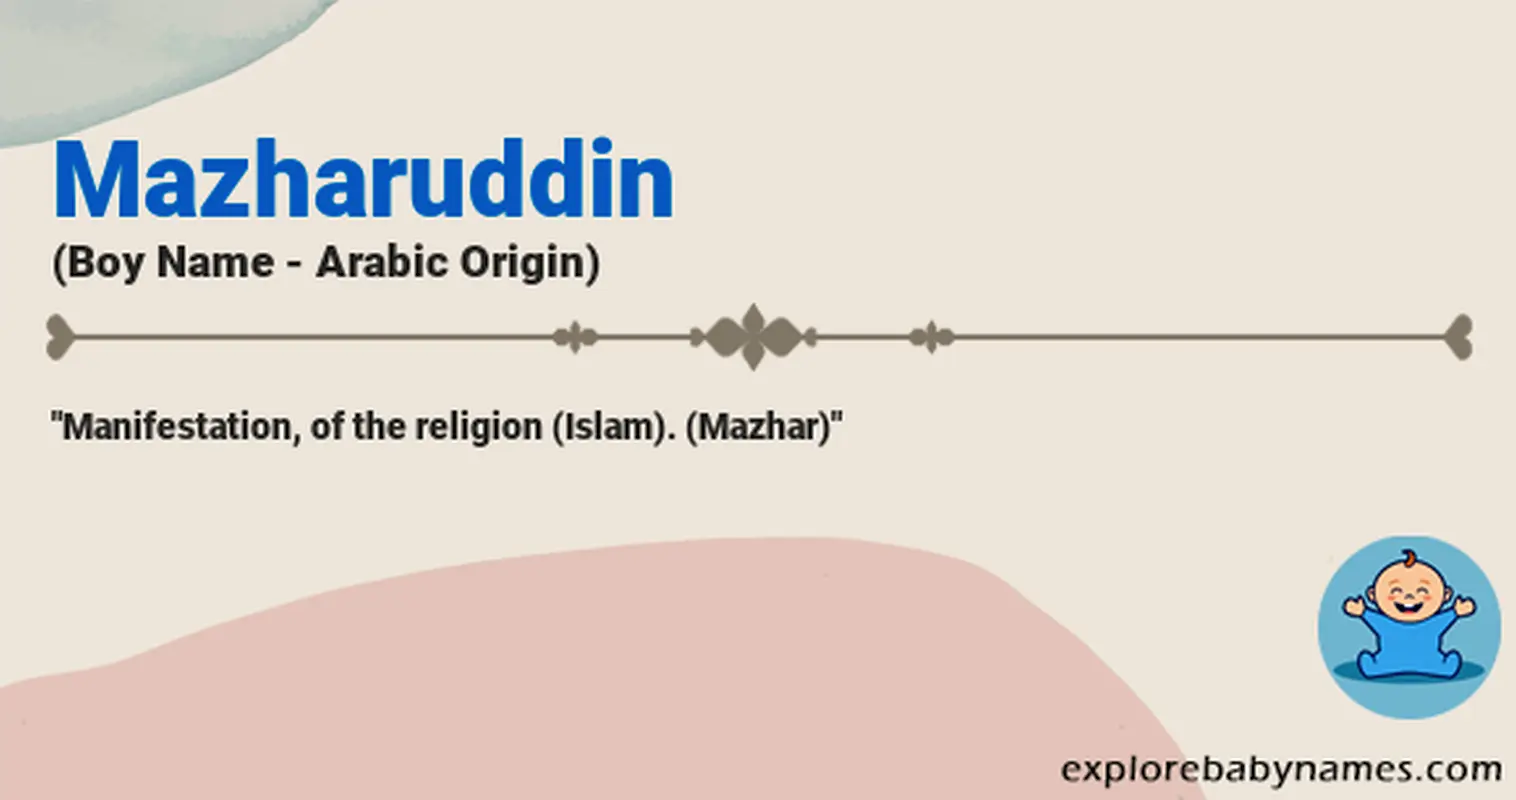 Meaning of Mazharuddin